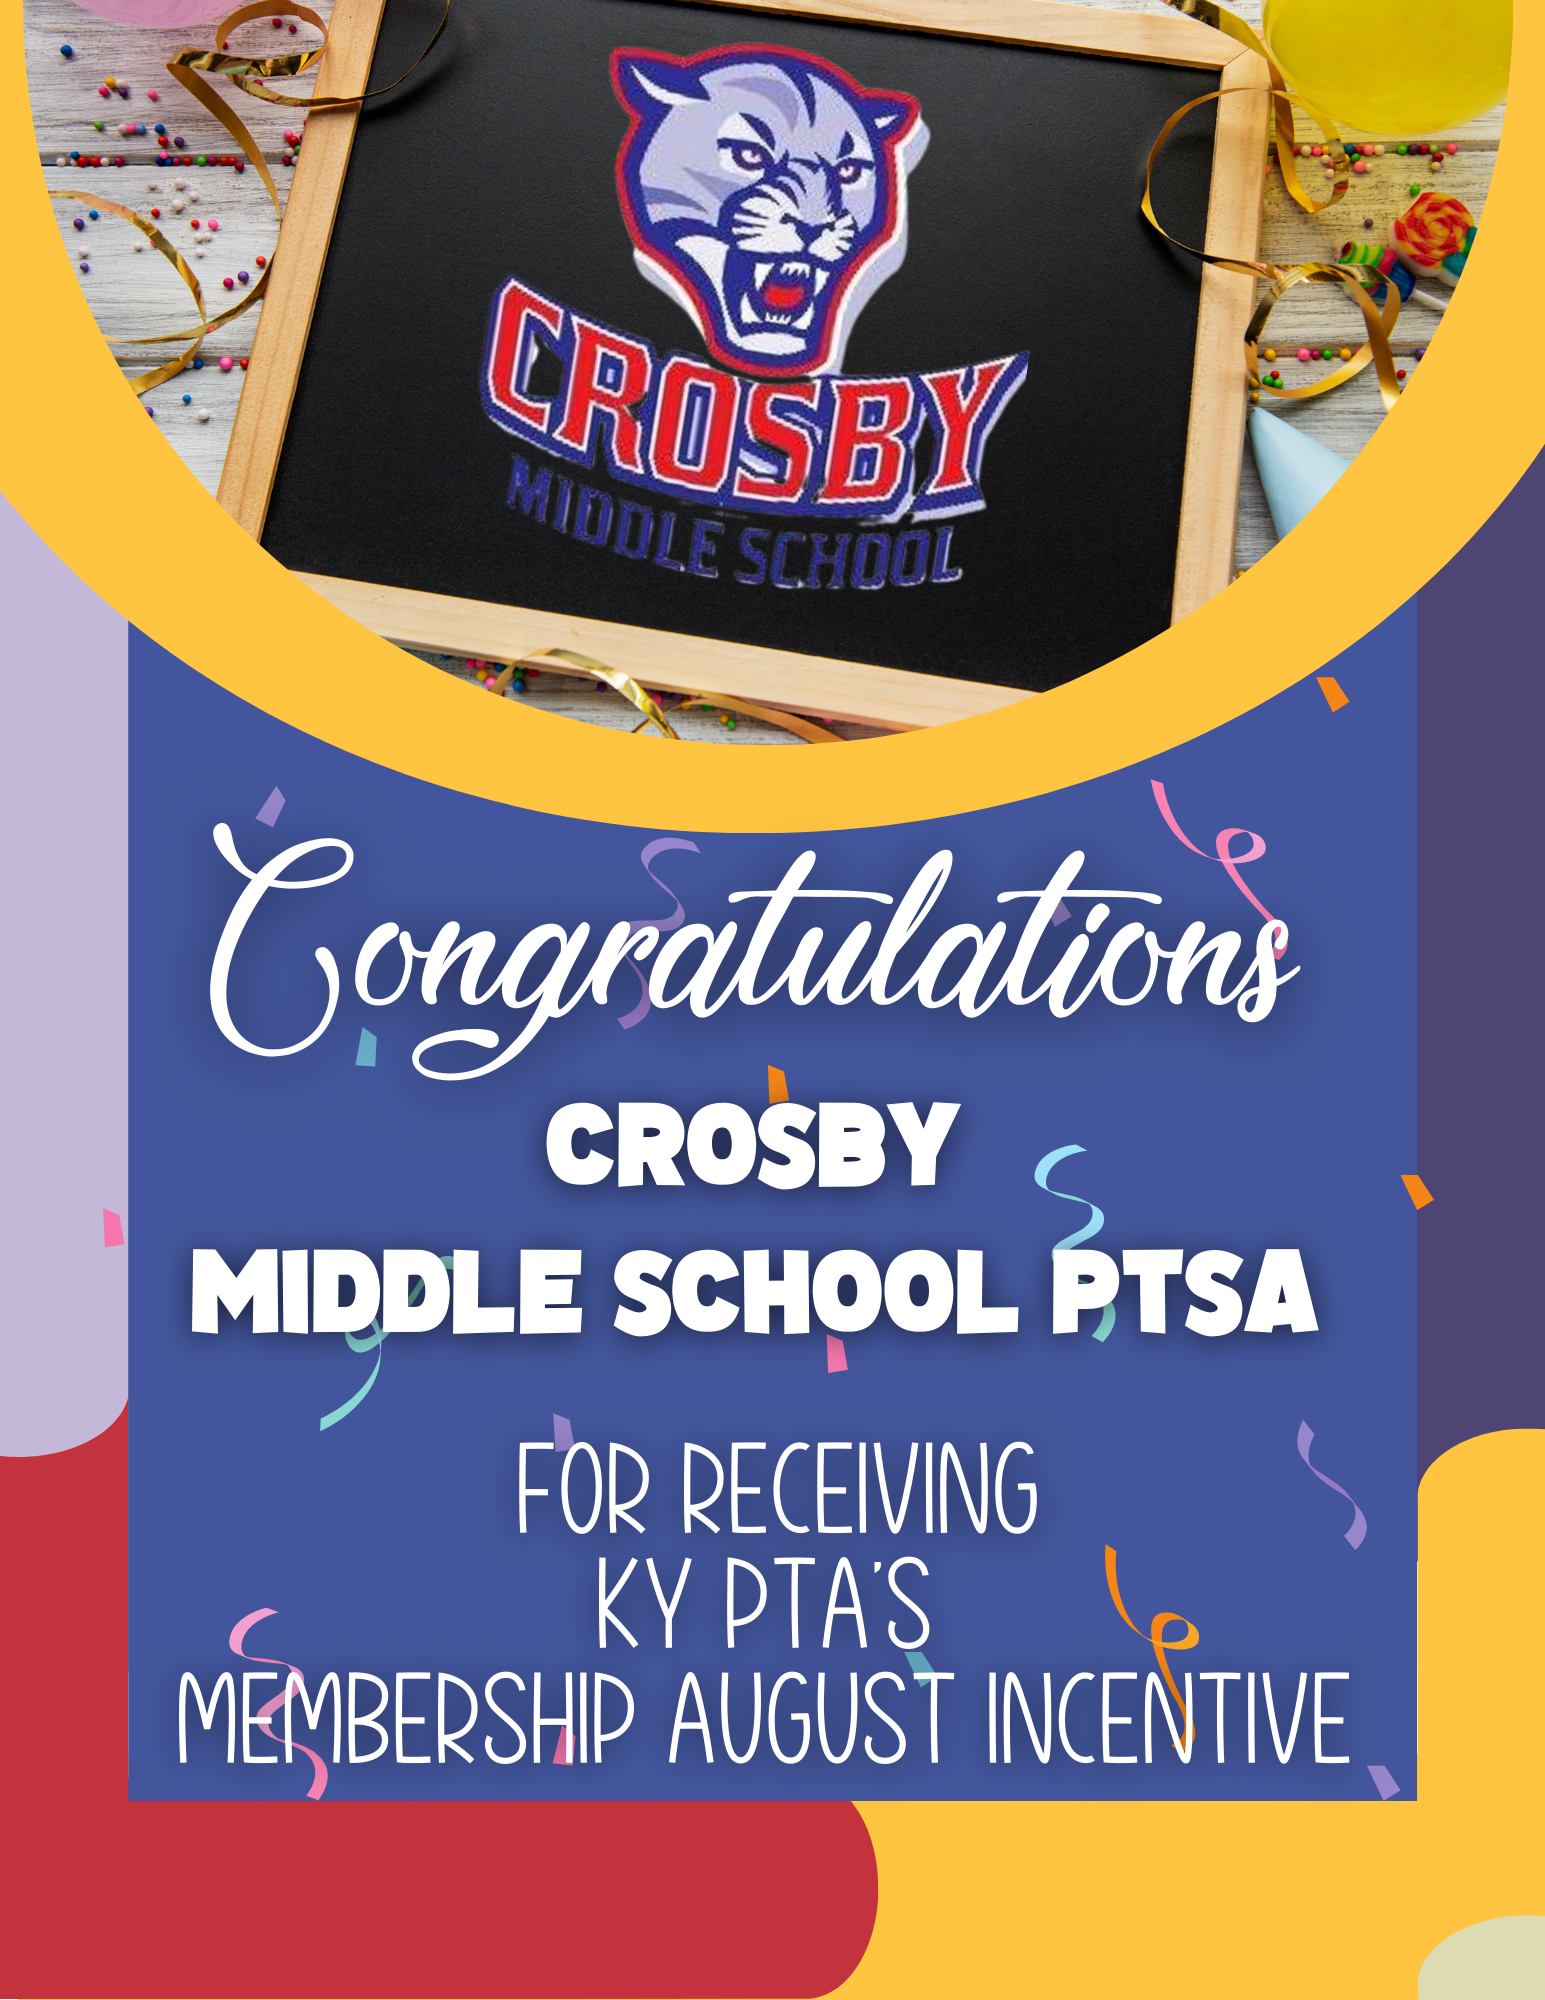 Crosby PTSA wins KY PTA August Membership Incentive